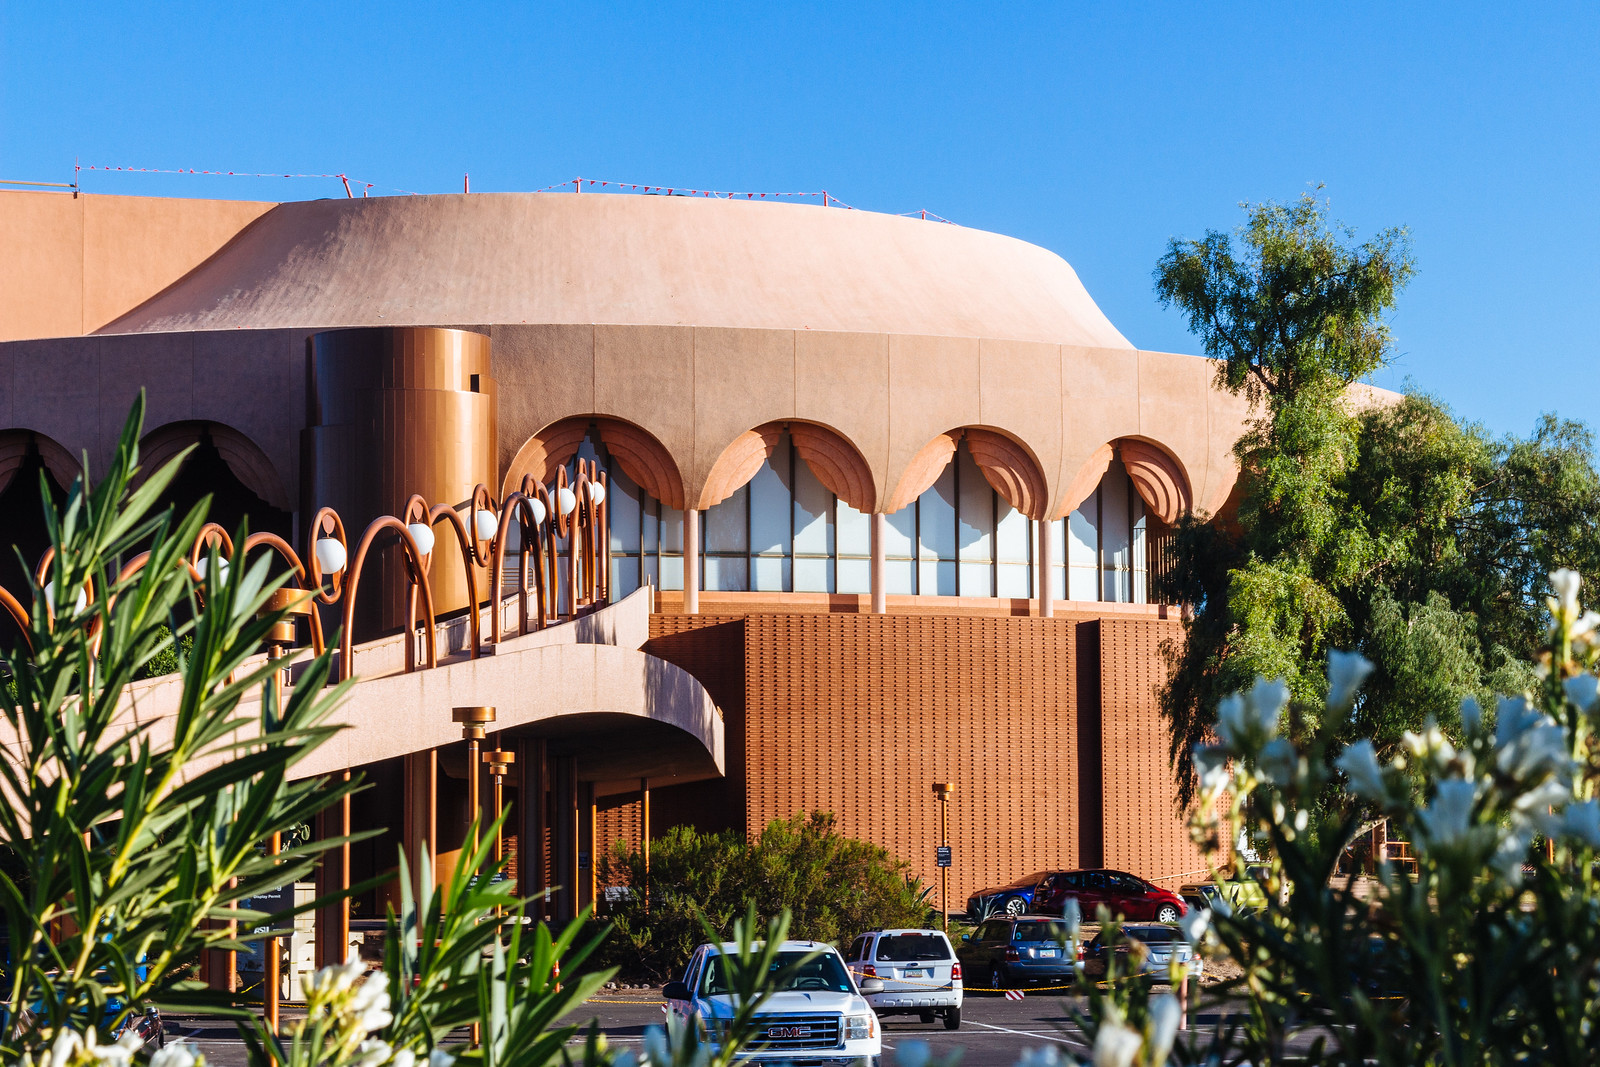 Rusty orange circular building with arcades that look like window drapes on ASU in Tempe, Arizona